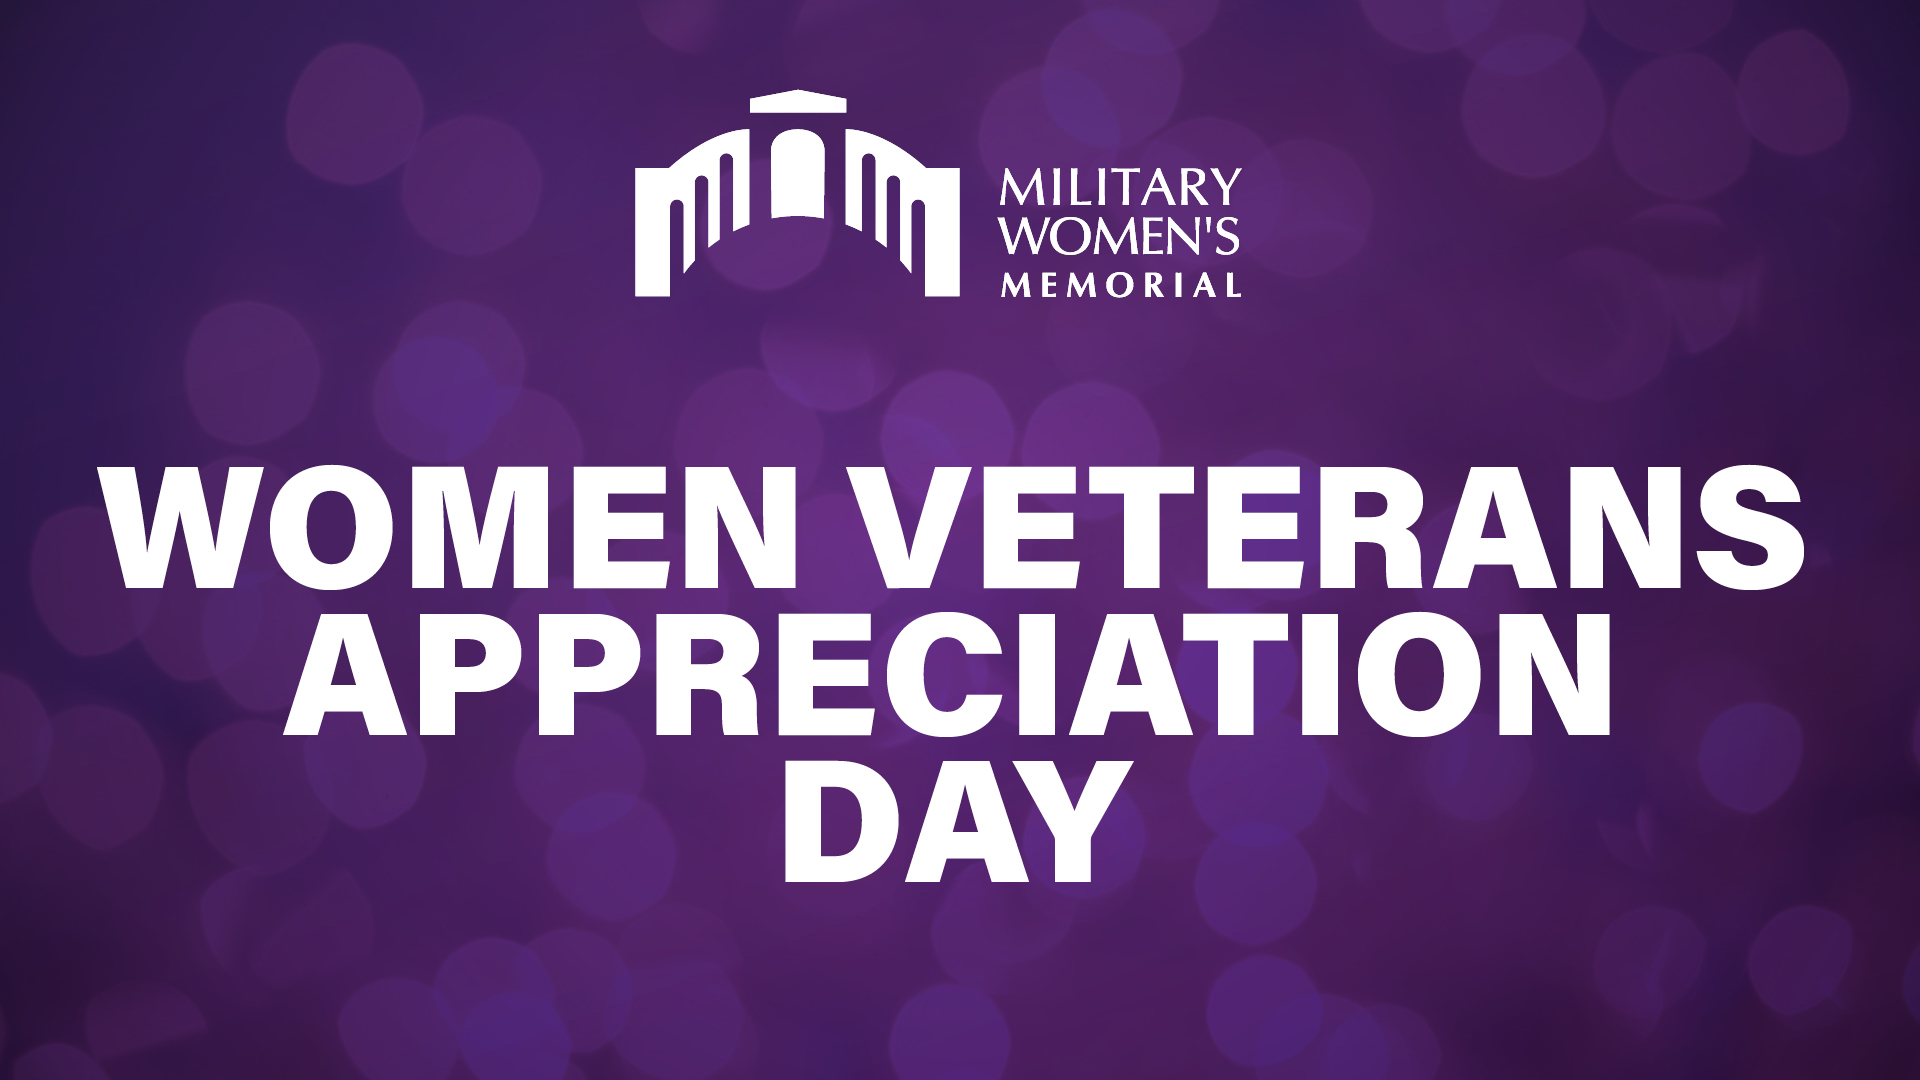 Women Veterans Appreciation Day in white on a purple background.